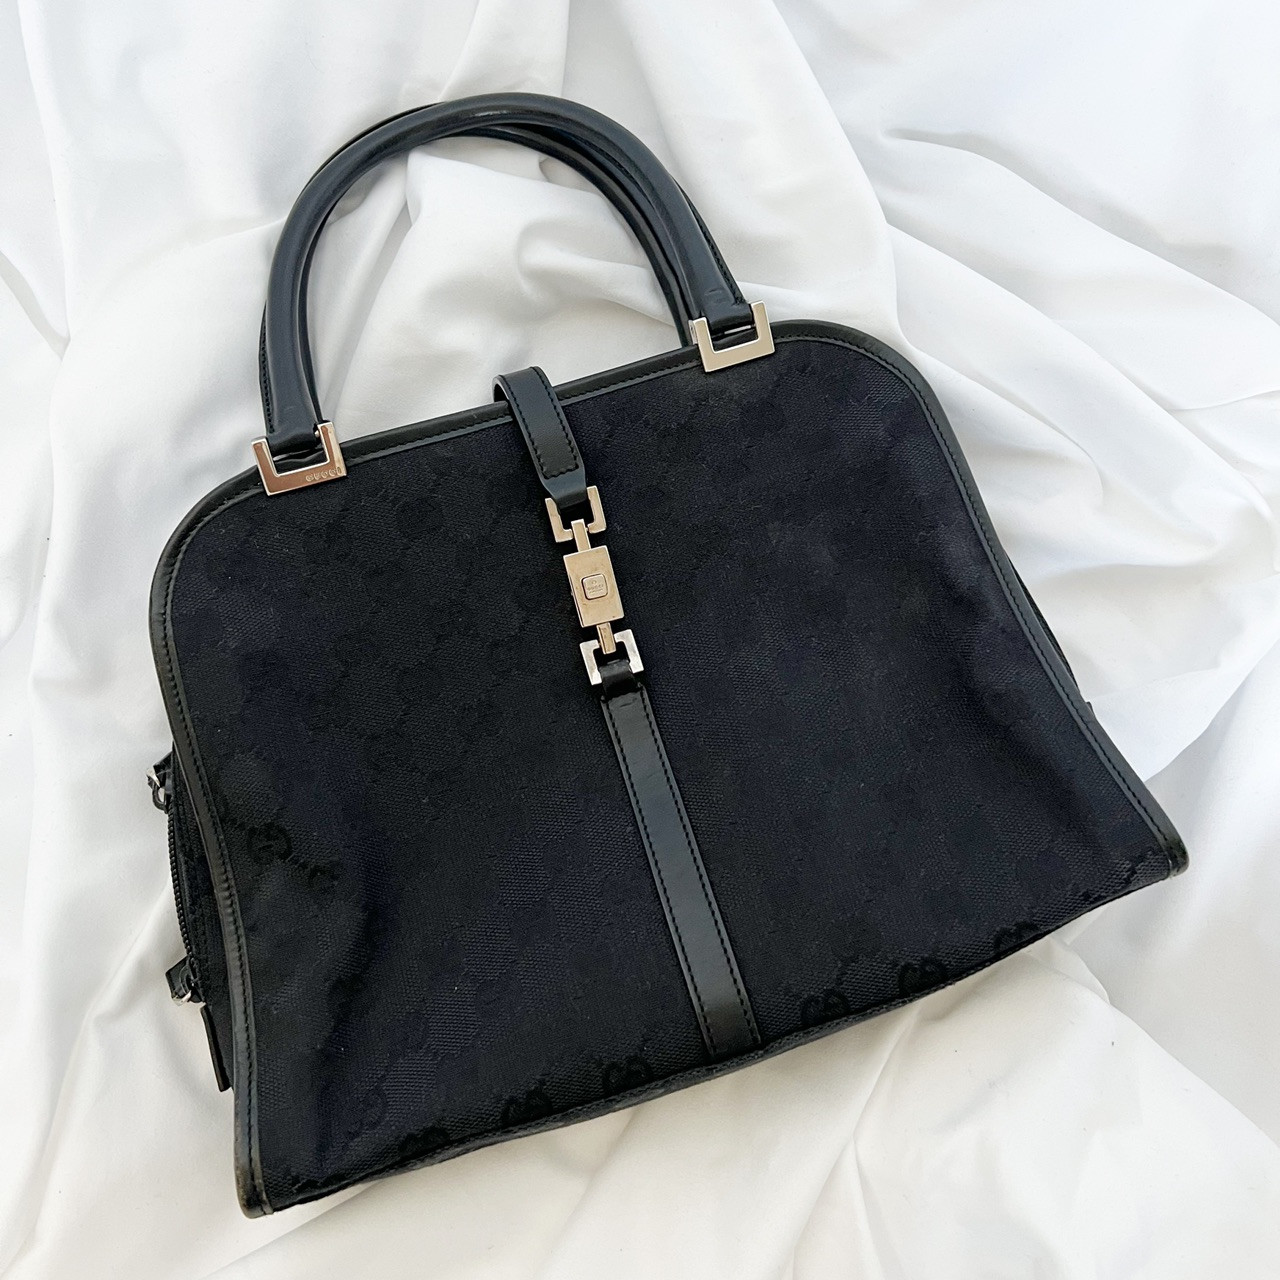 Gucci Black Monogram Handbag